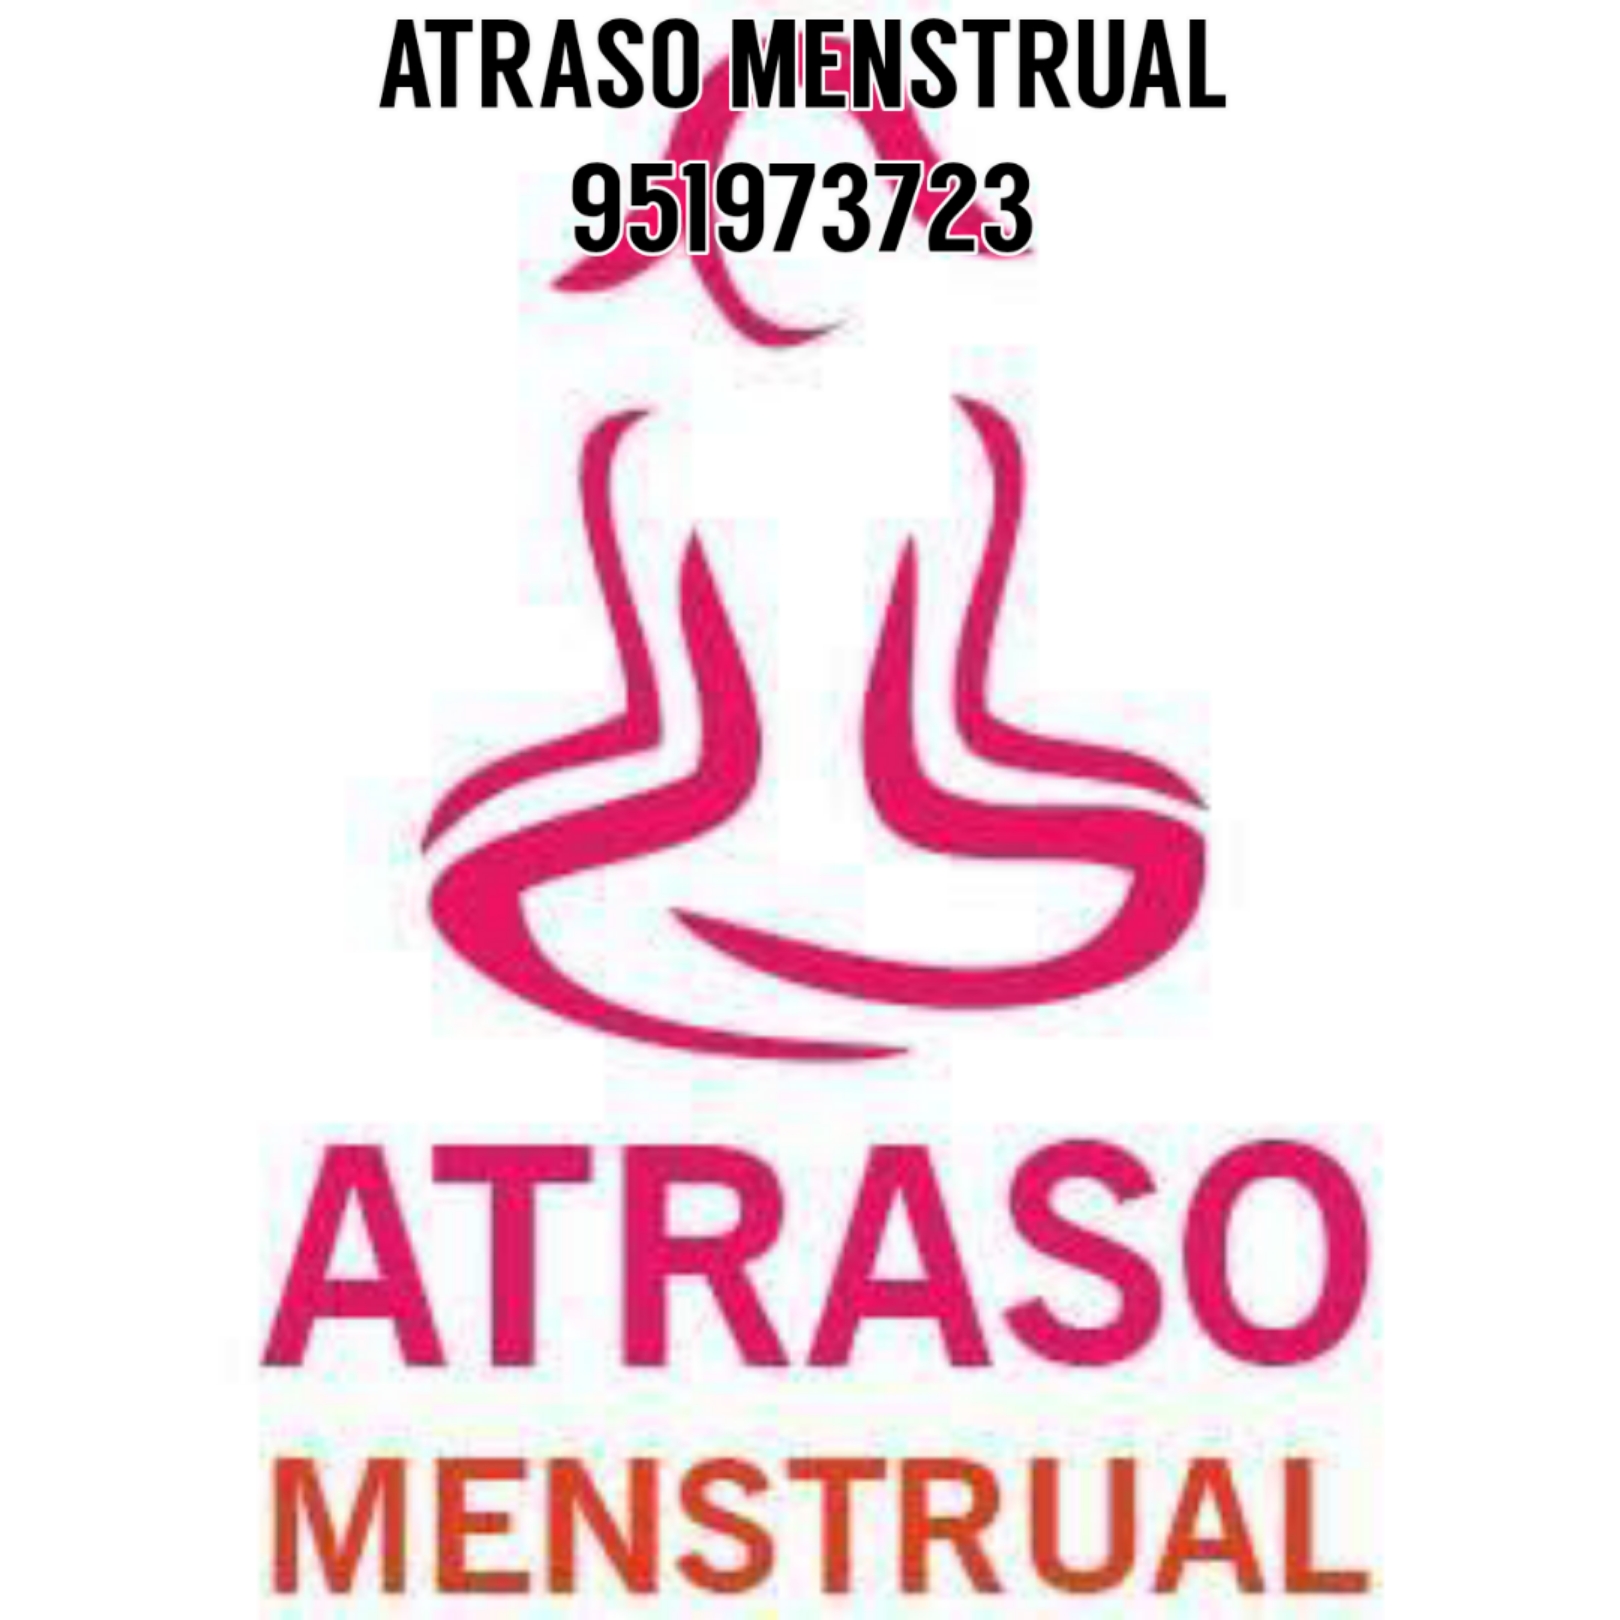 Atraso menstrual 951973723 TUMBES Centro Medico Garantizado